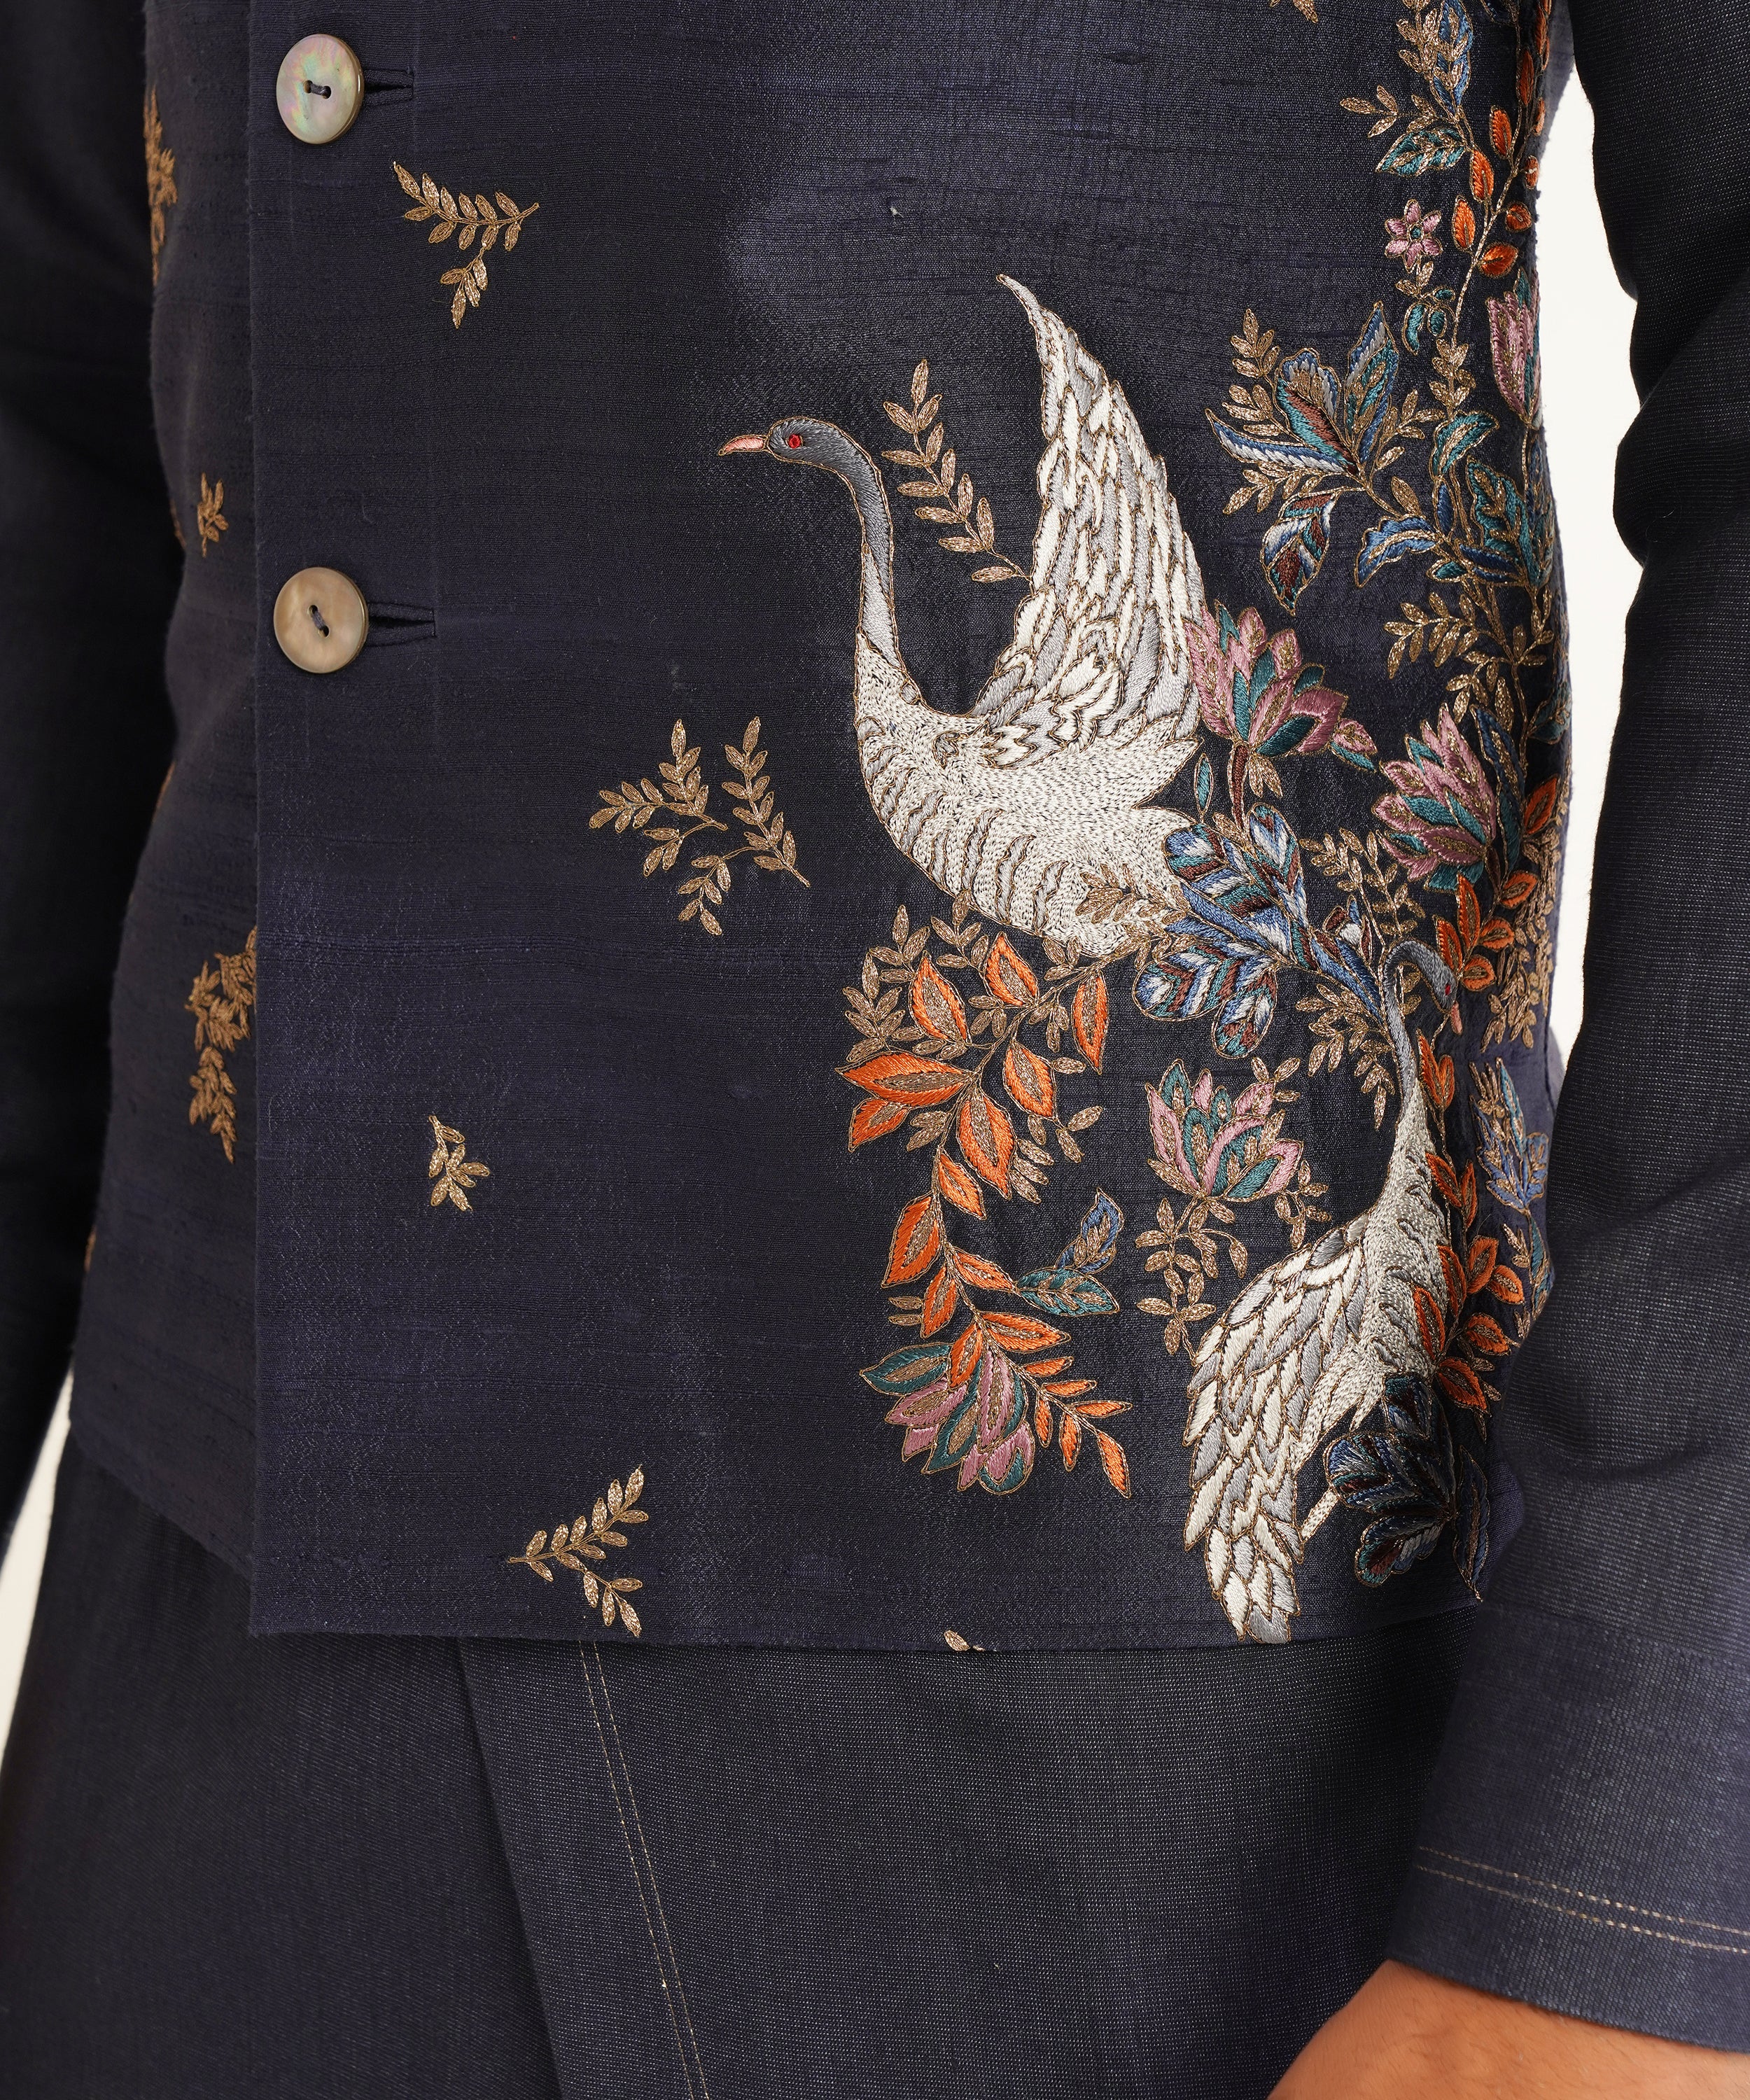 Thread and Zari Embroidered Jawahar Jacket